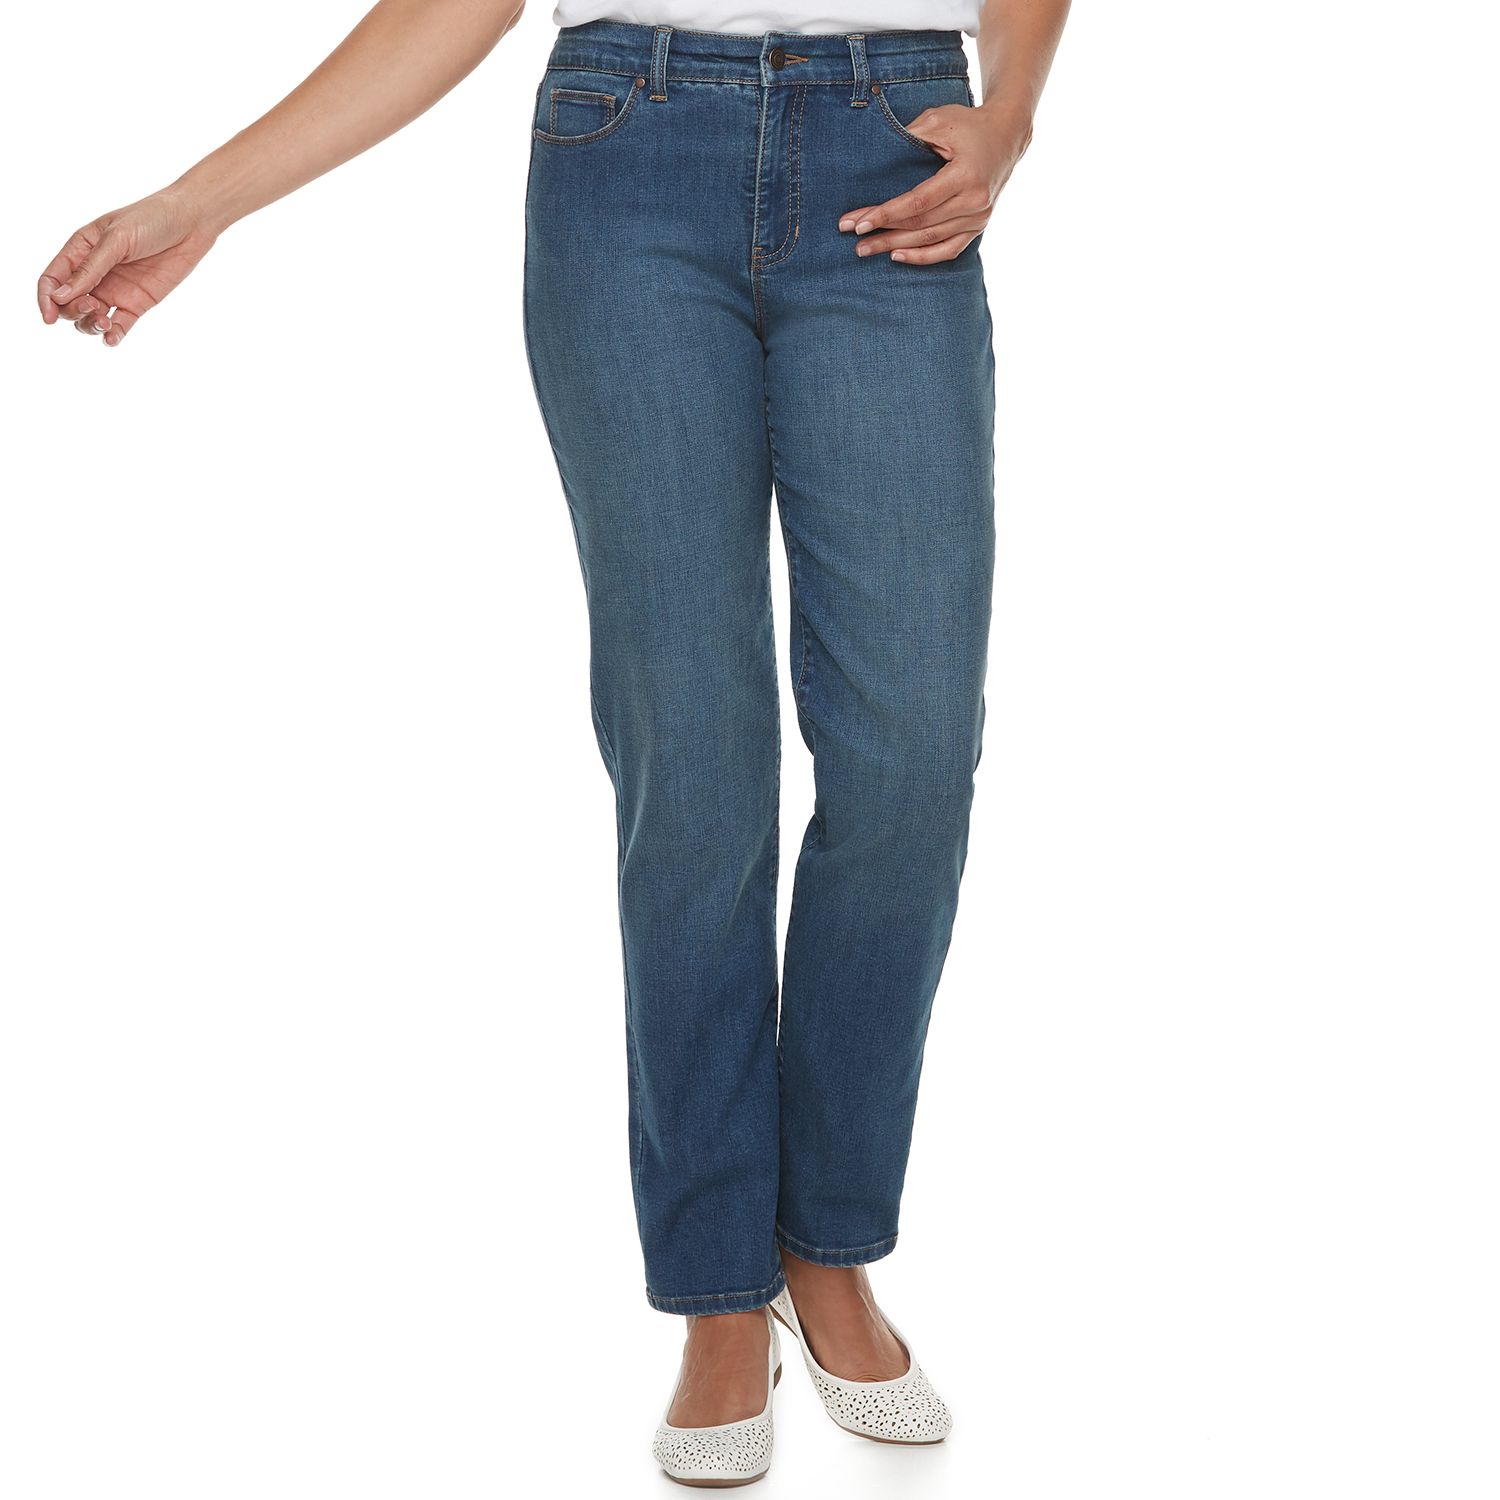 kohl's croft and barrow women's jeans